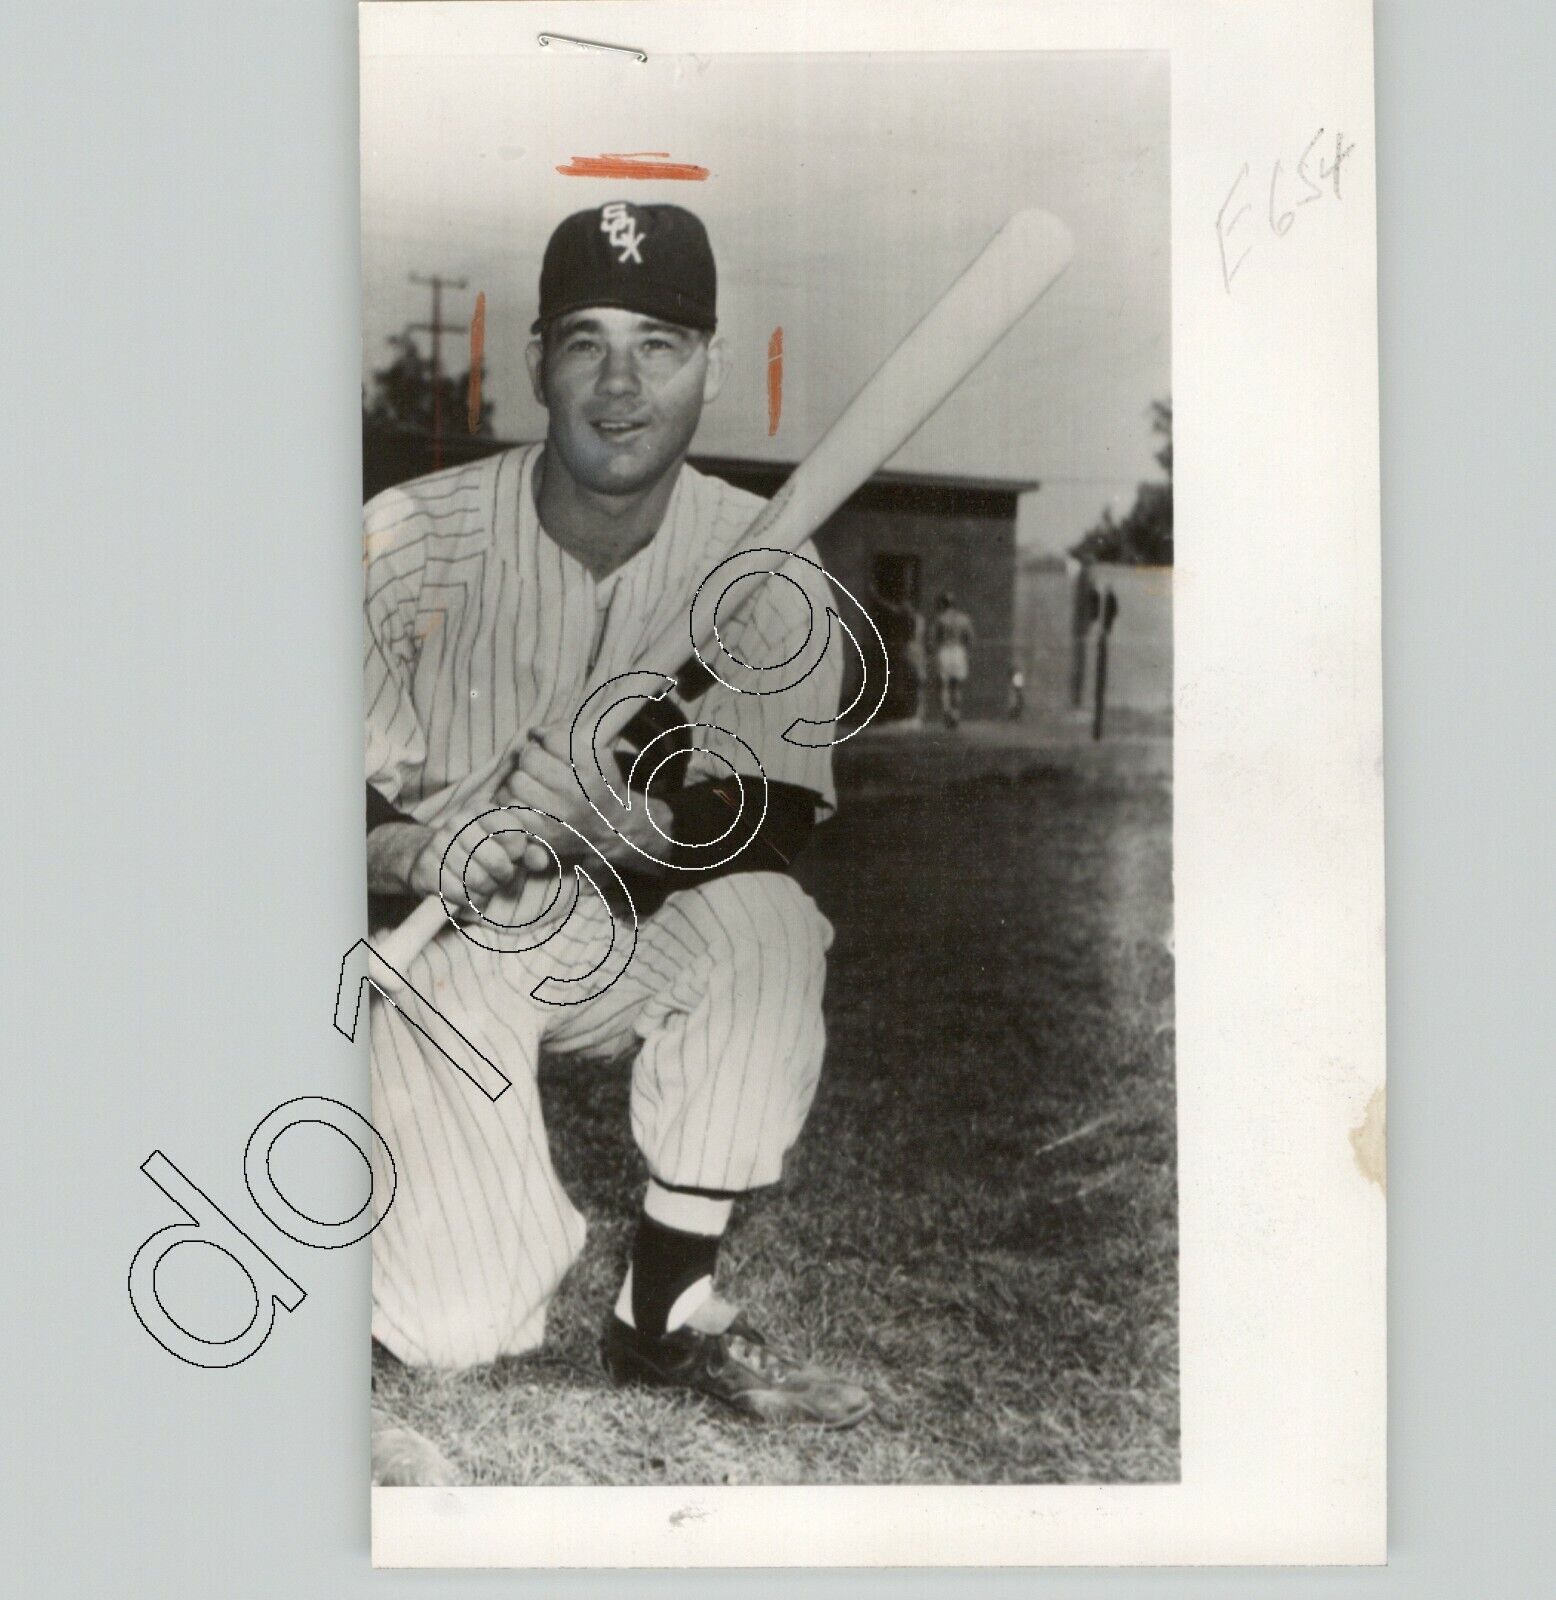 BASEBALL Player FERRIS FAIN In CHICAGO WHITE SOX Uniform Sports 1953 Press Photo